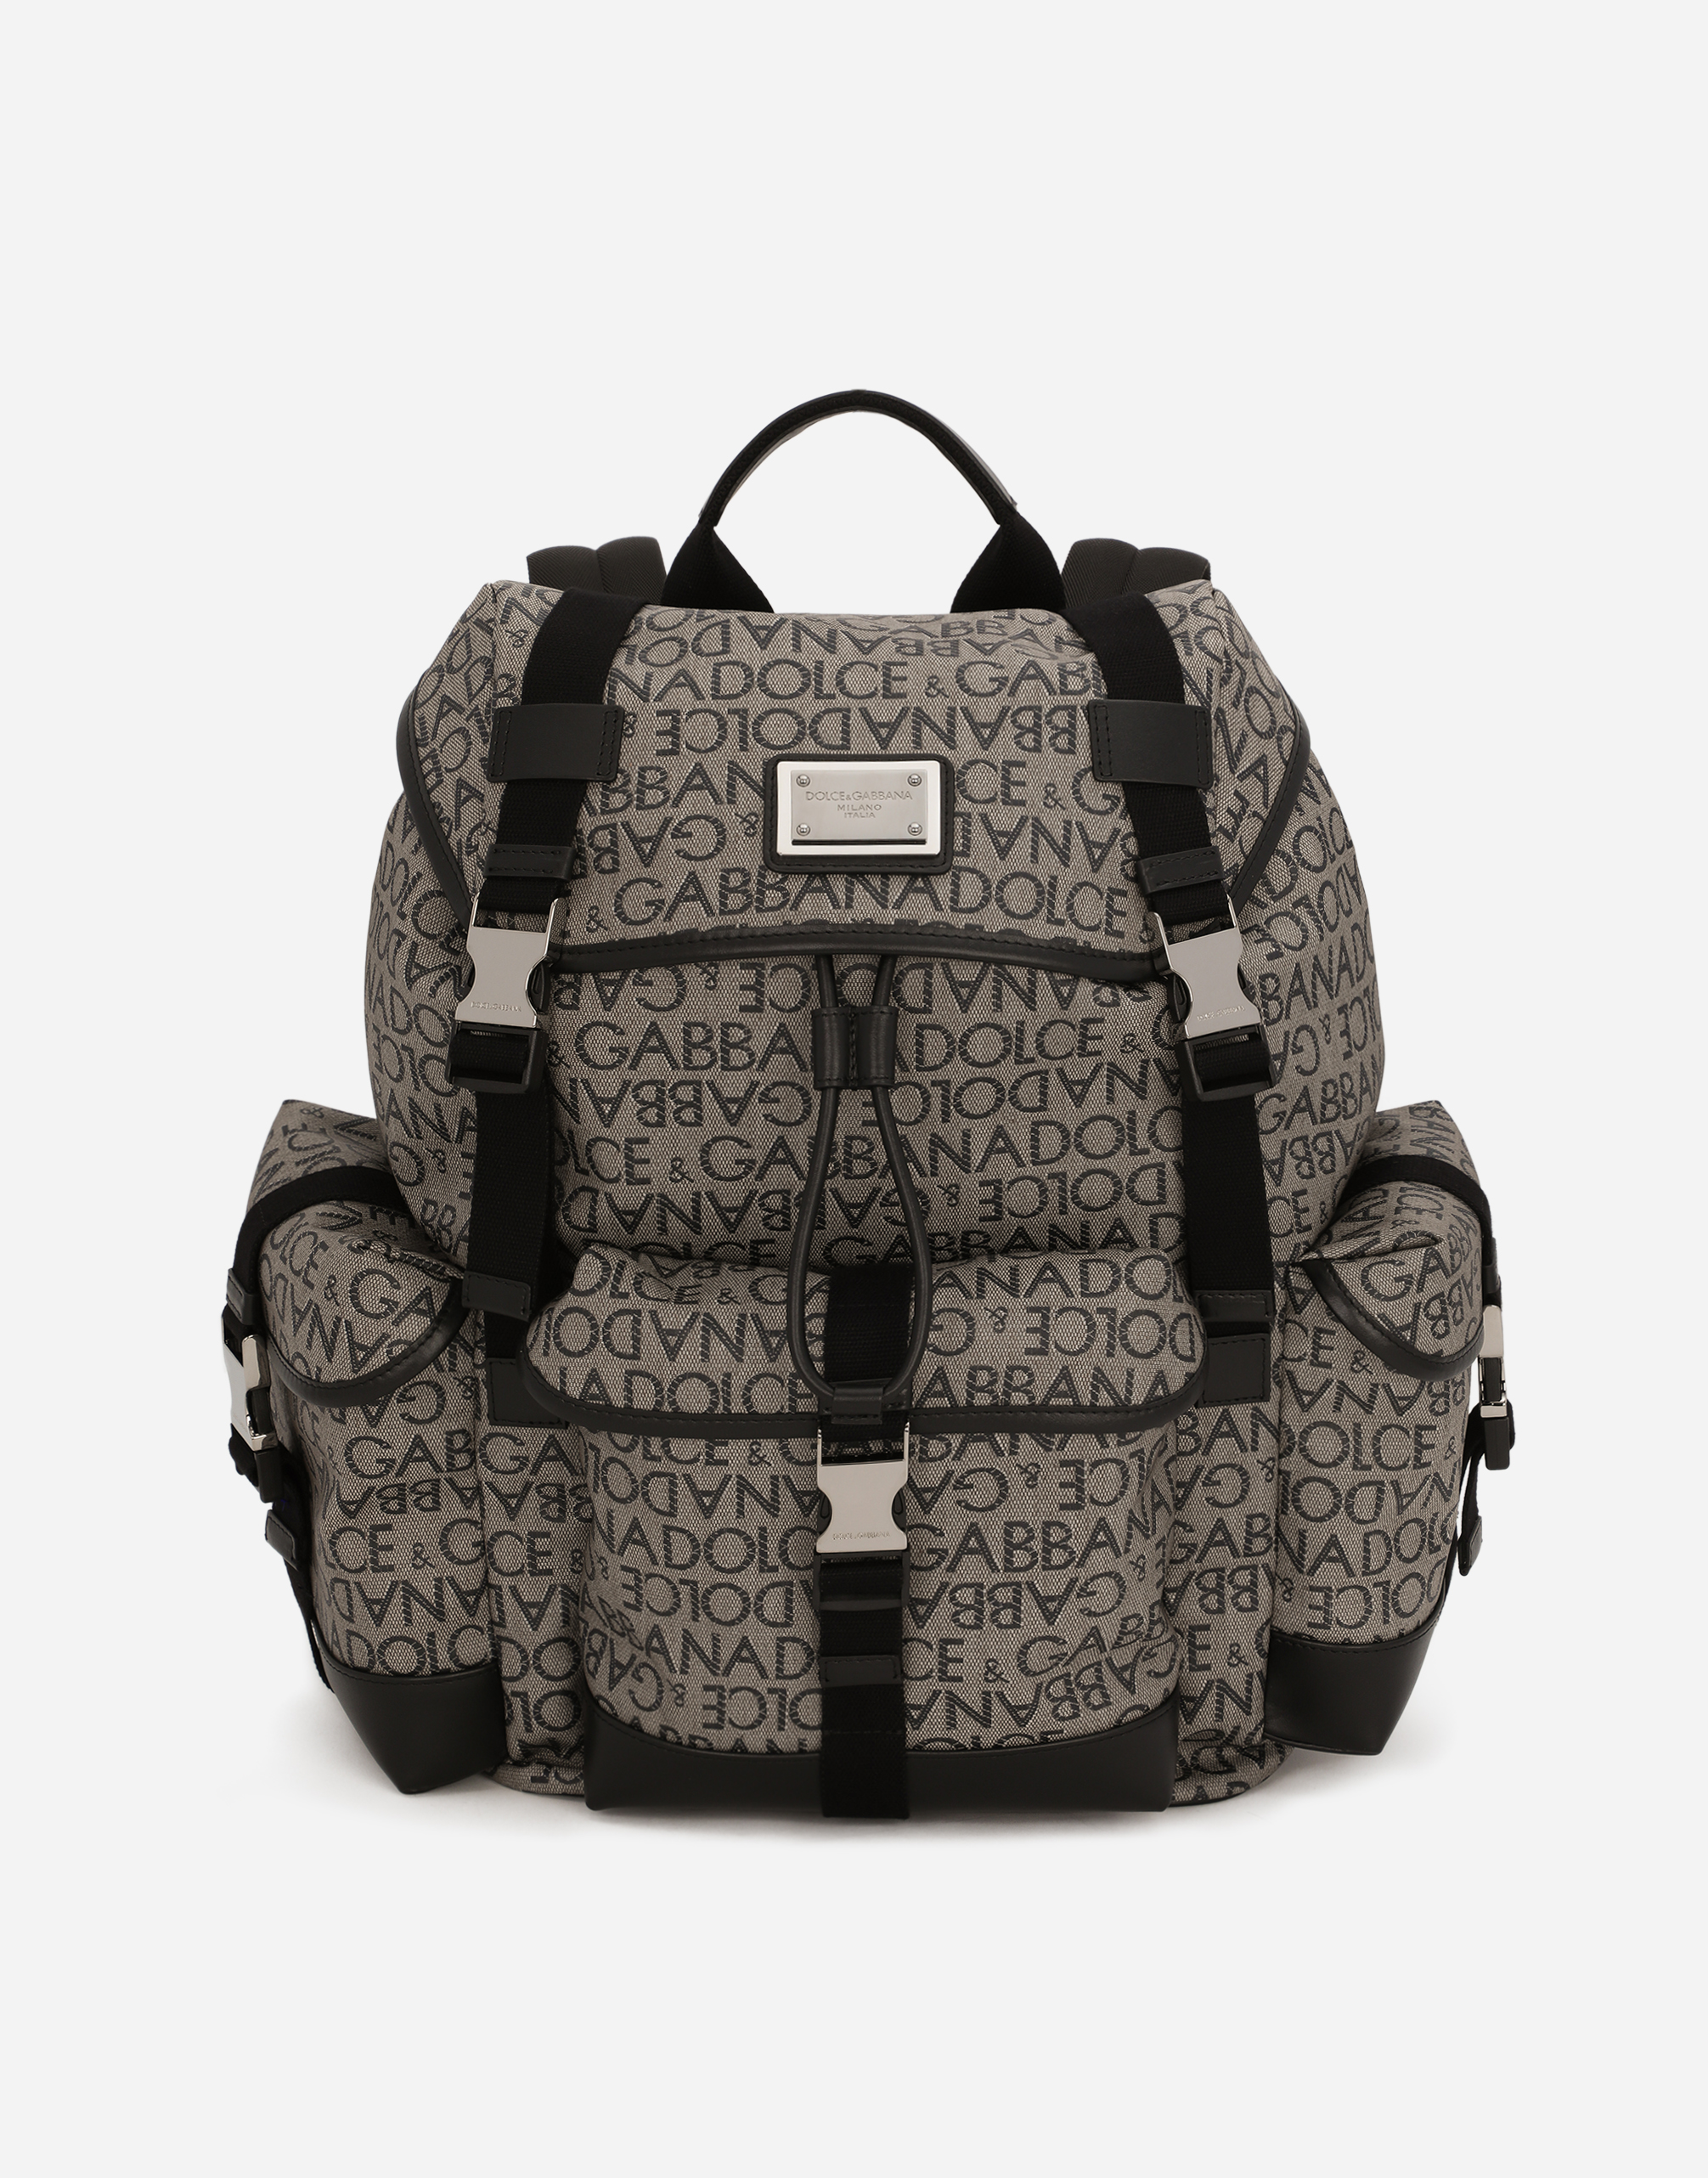 Dolce & Gabbana Jacquard Backpack In Multicolor